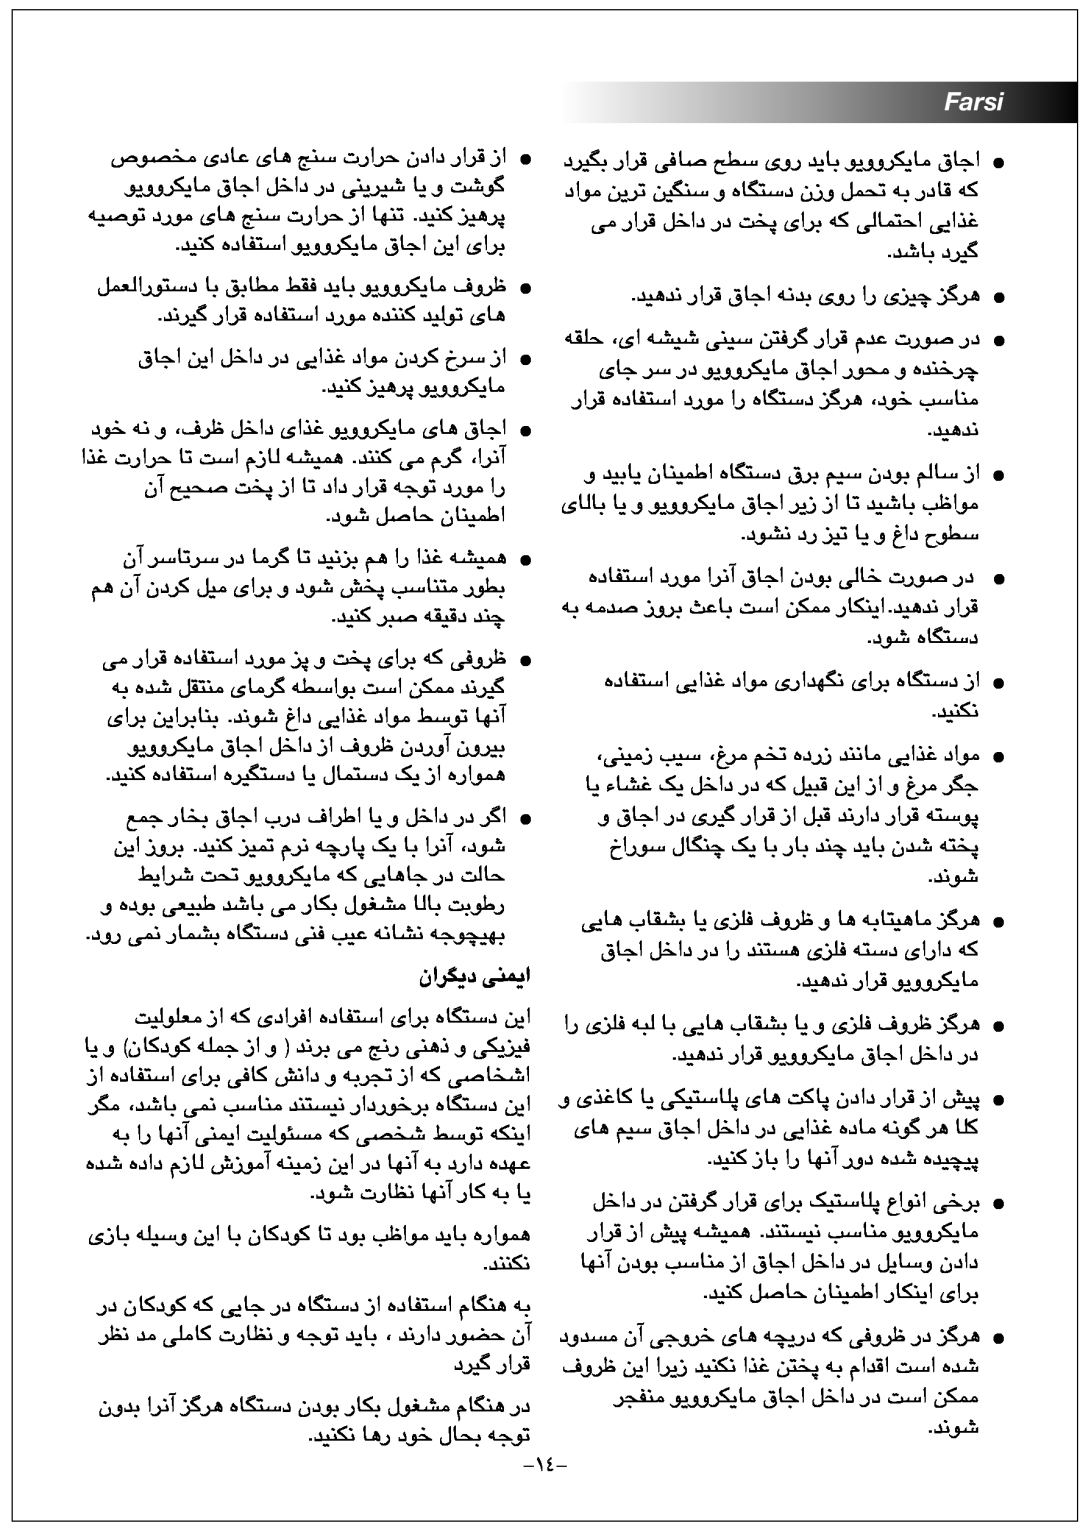 Black & Decker MZ2000P manual ﻥﺍﺮﮕﯾﺩ ﯽﻨﻤﯾﺍ, Farsi 